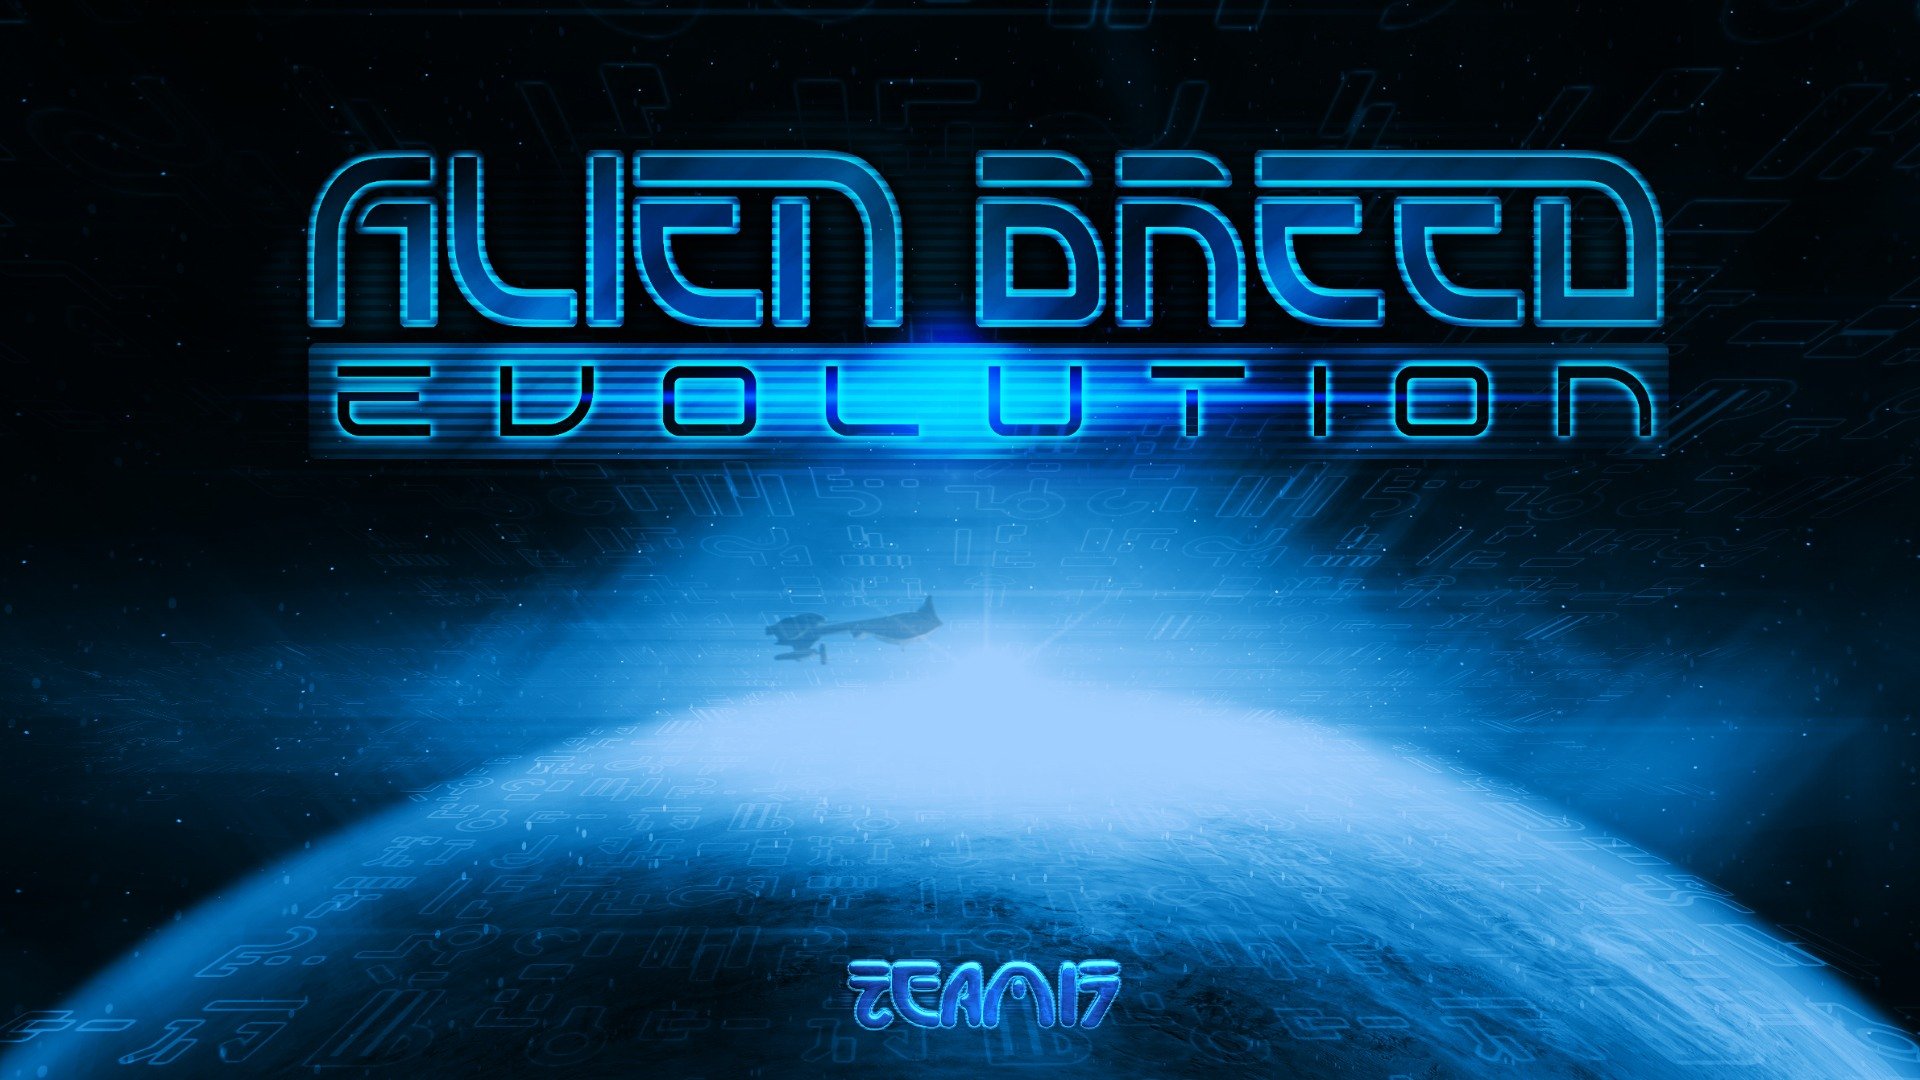 Alien Breed: Evolution